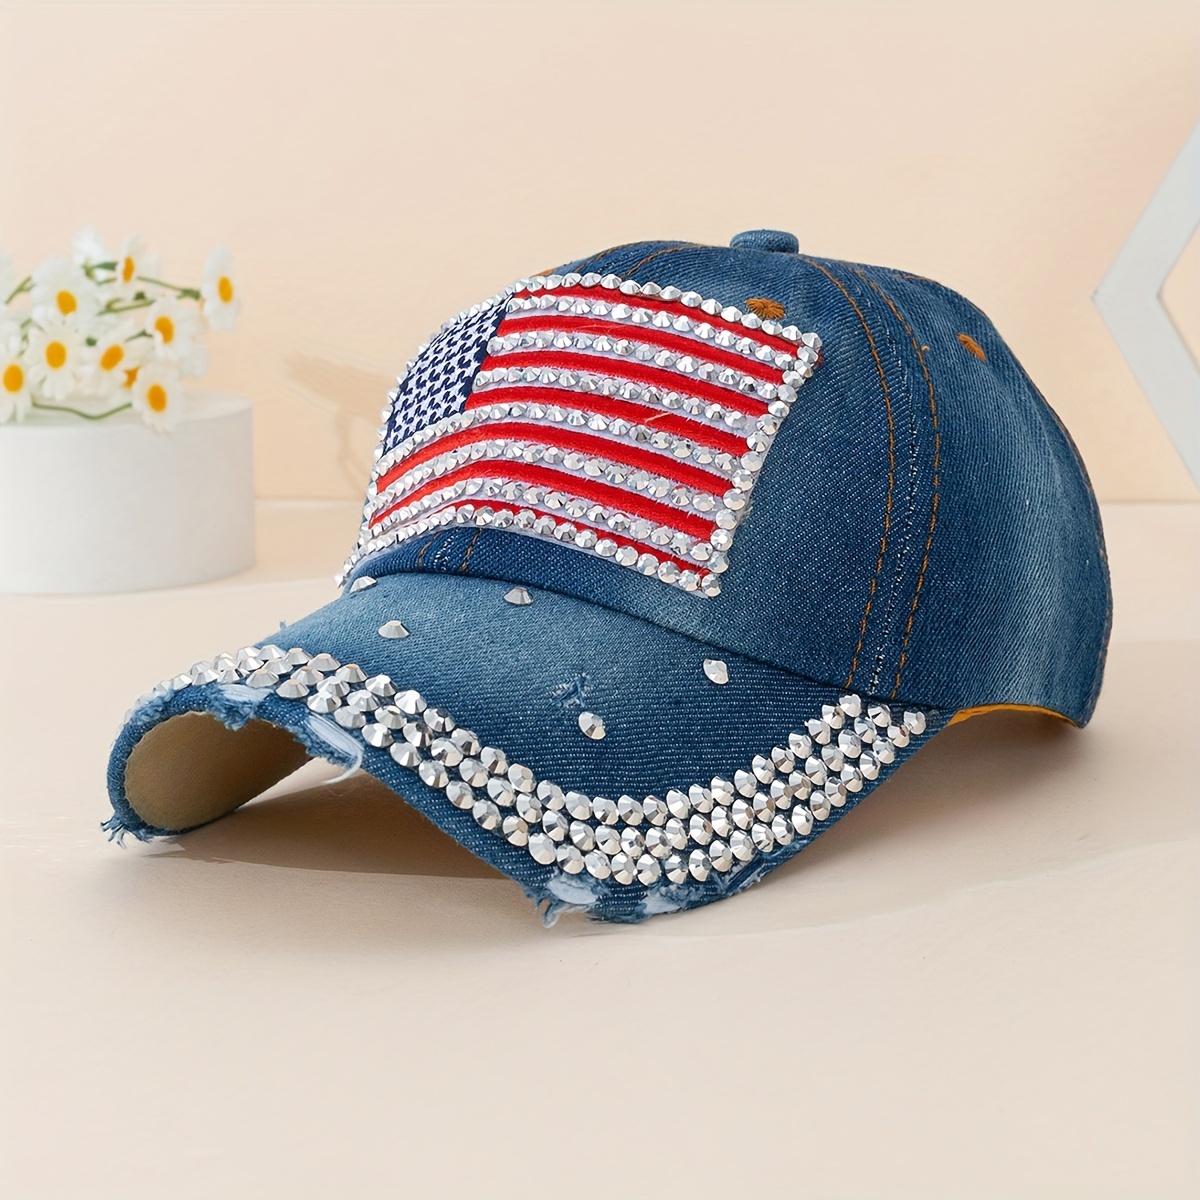 

Rhinestone Usa Flag Fashion Baseball Cap, Curved Brim Adjustable Sunshade Patriotic Denim Sun Hat For Outdoor